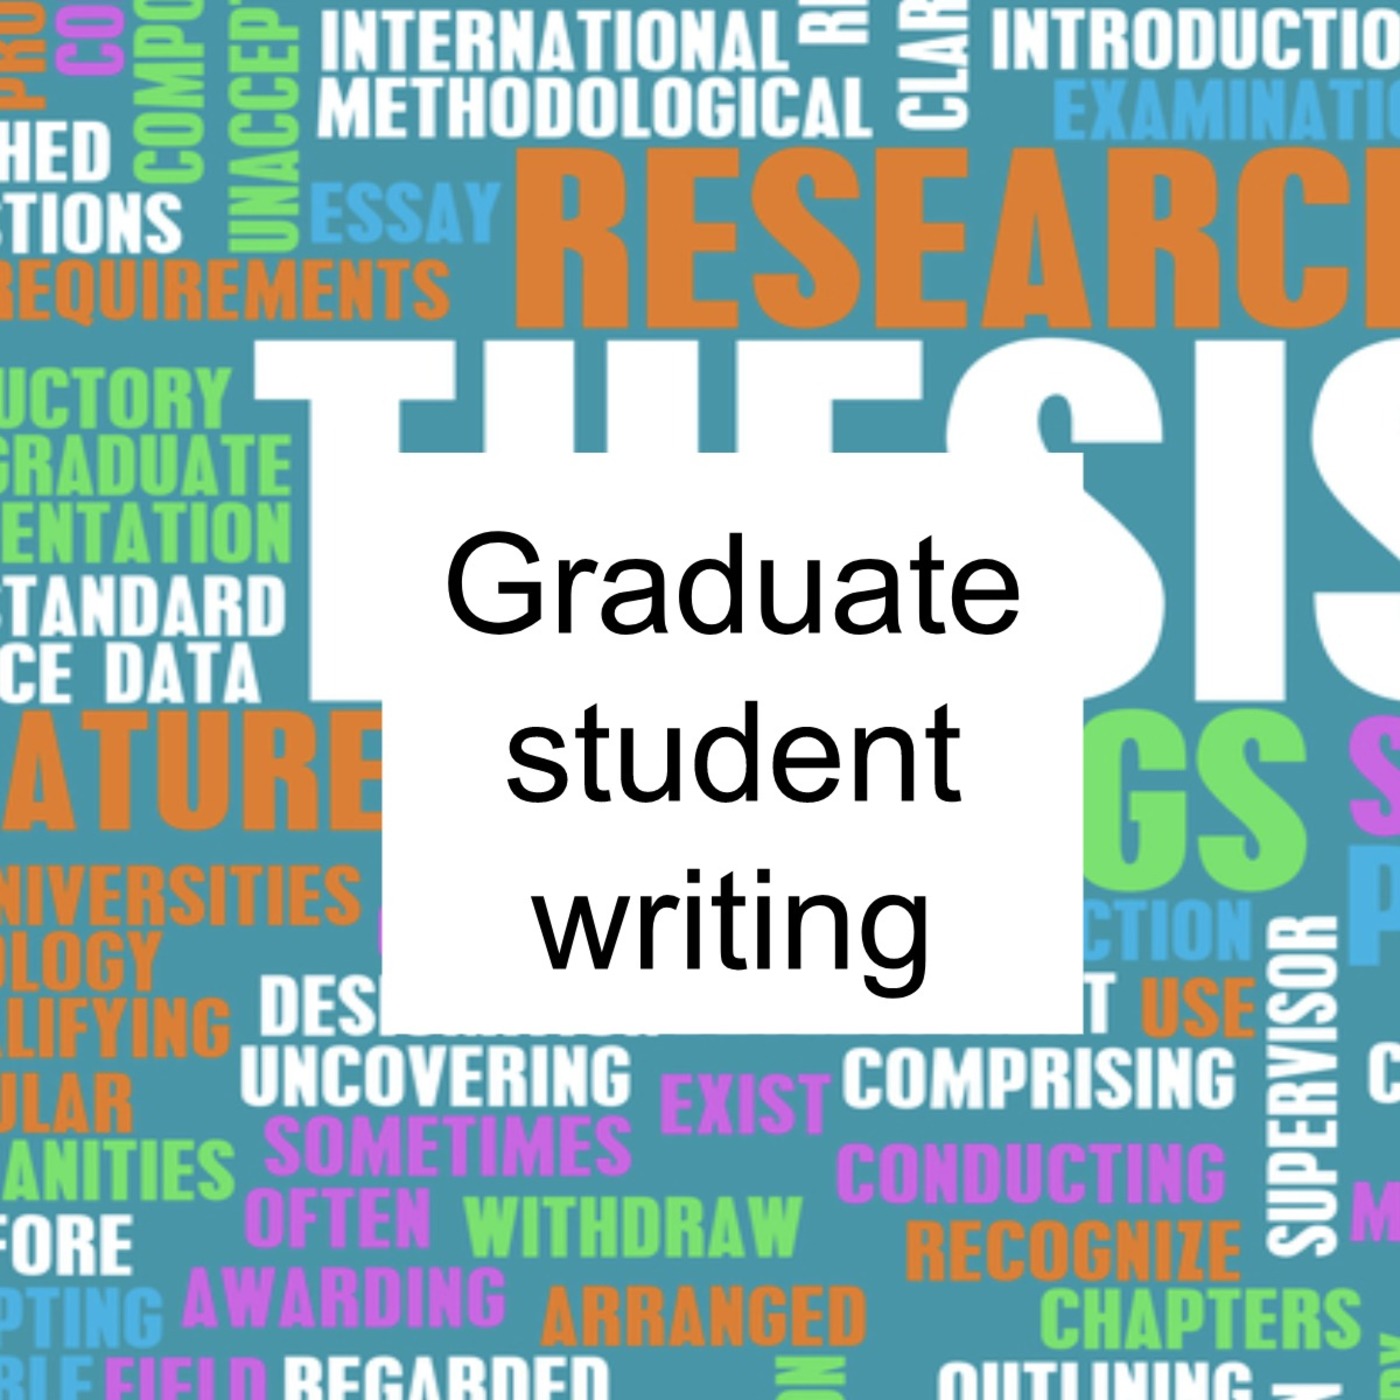 Helping graduate students write better